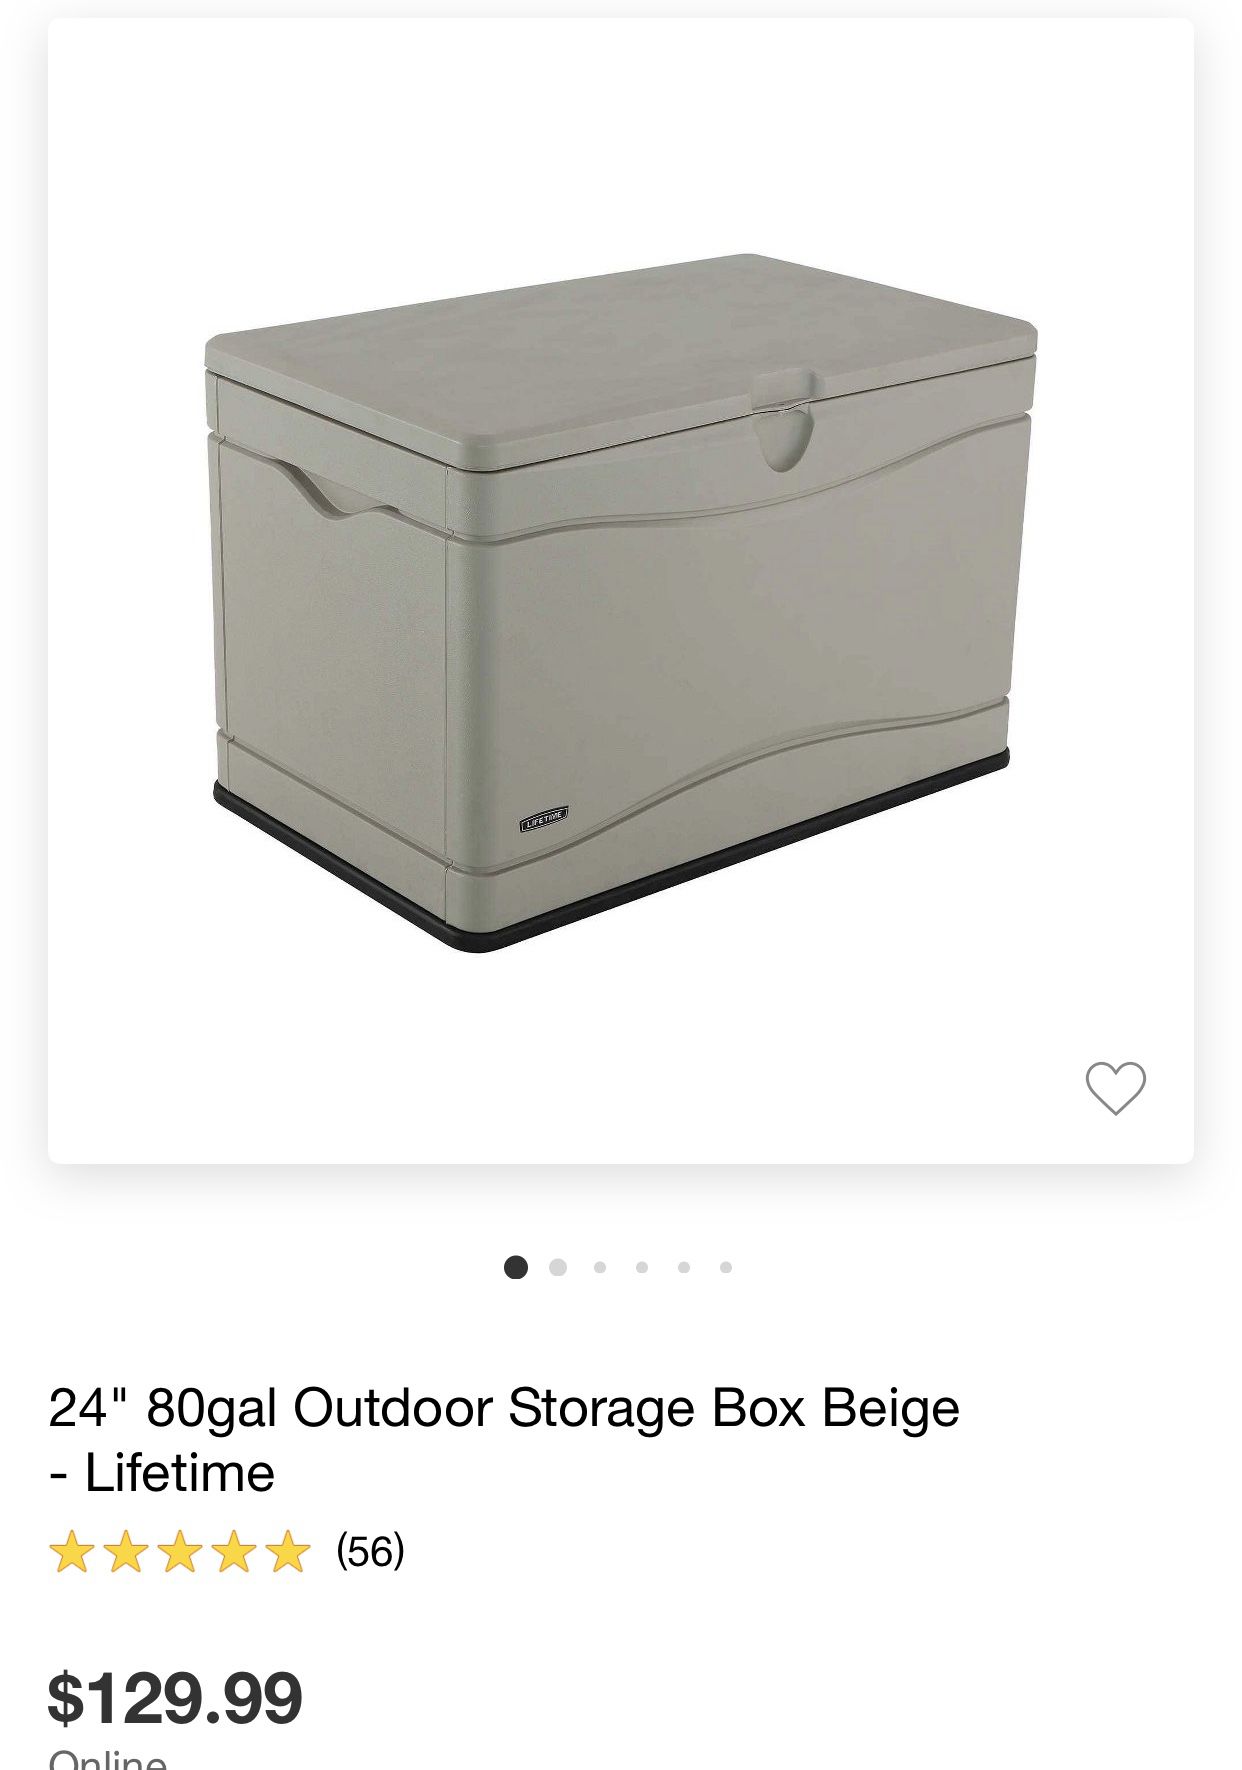 Outdoor Storage box- lifetime